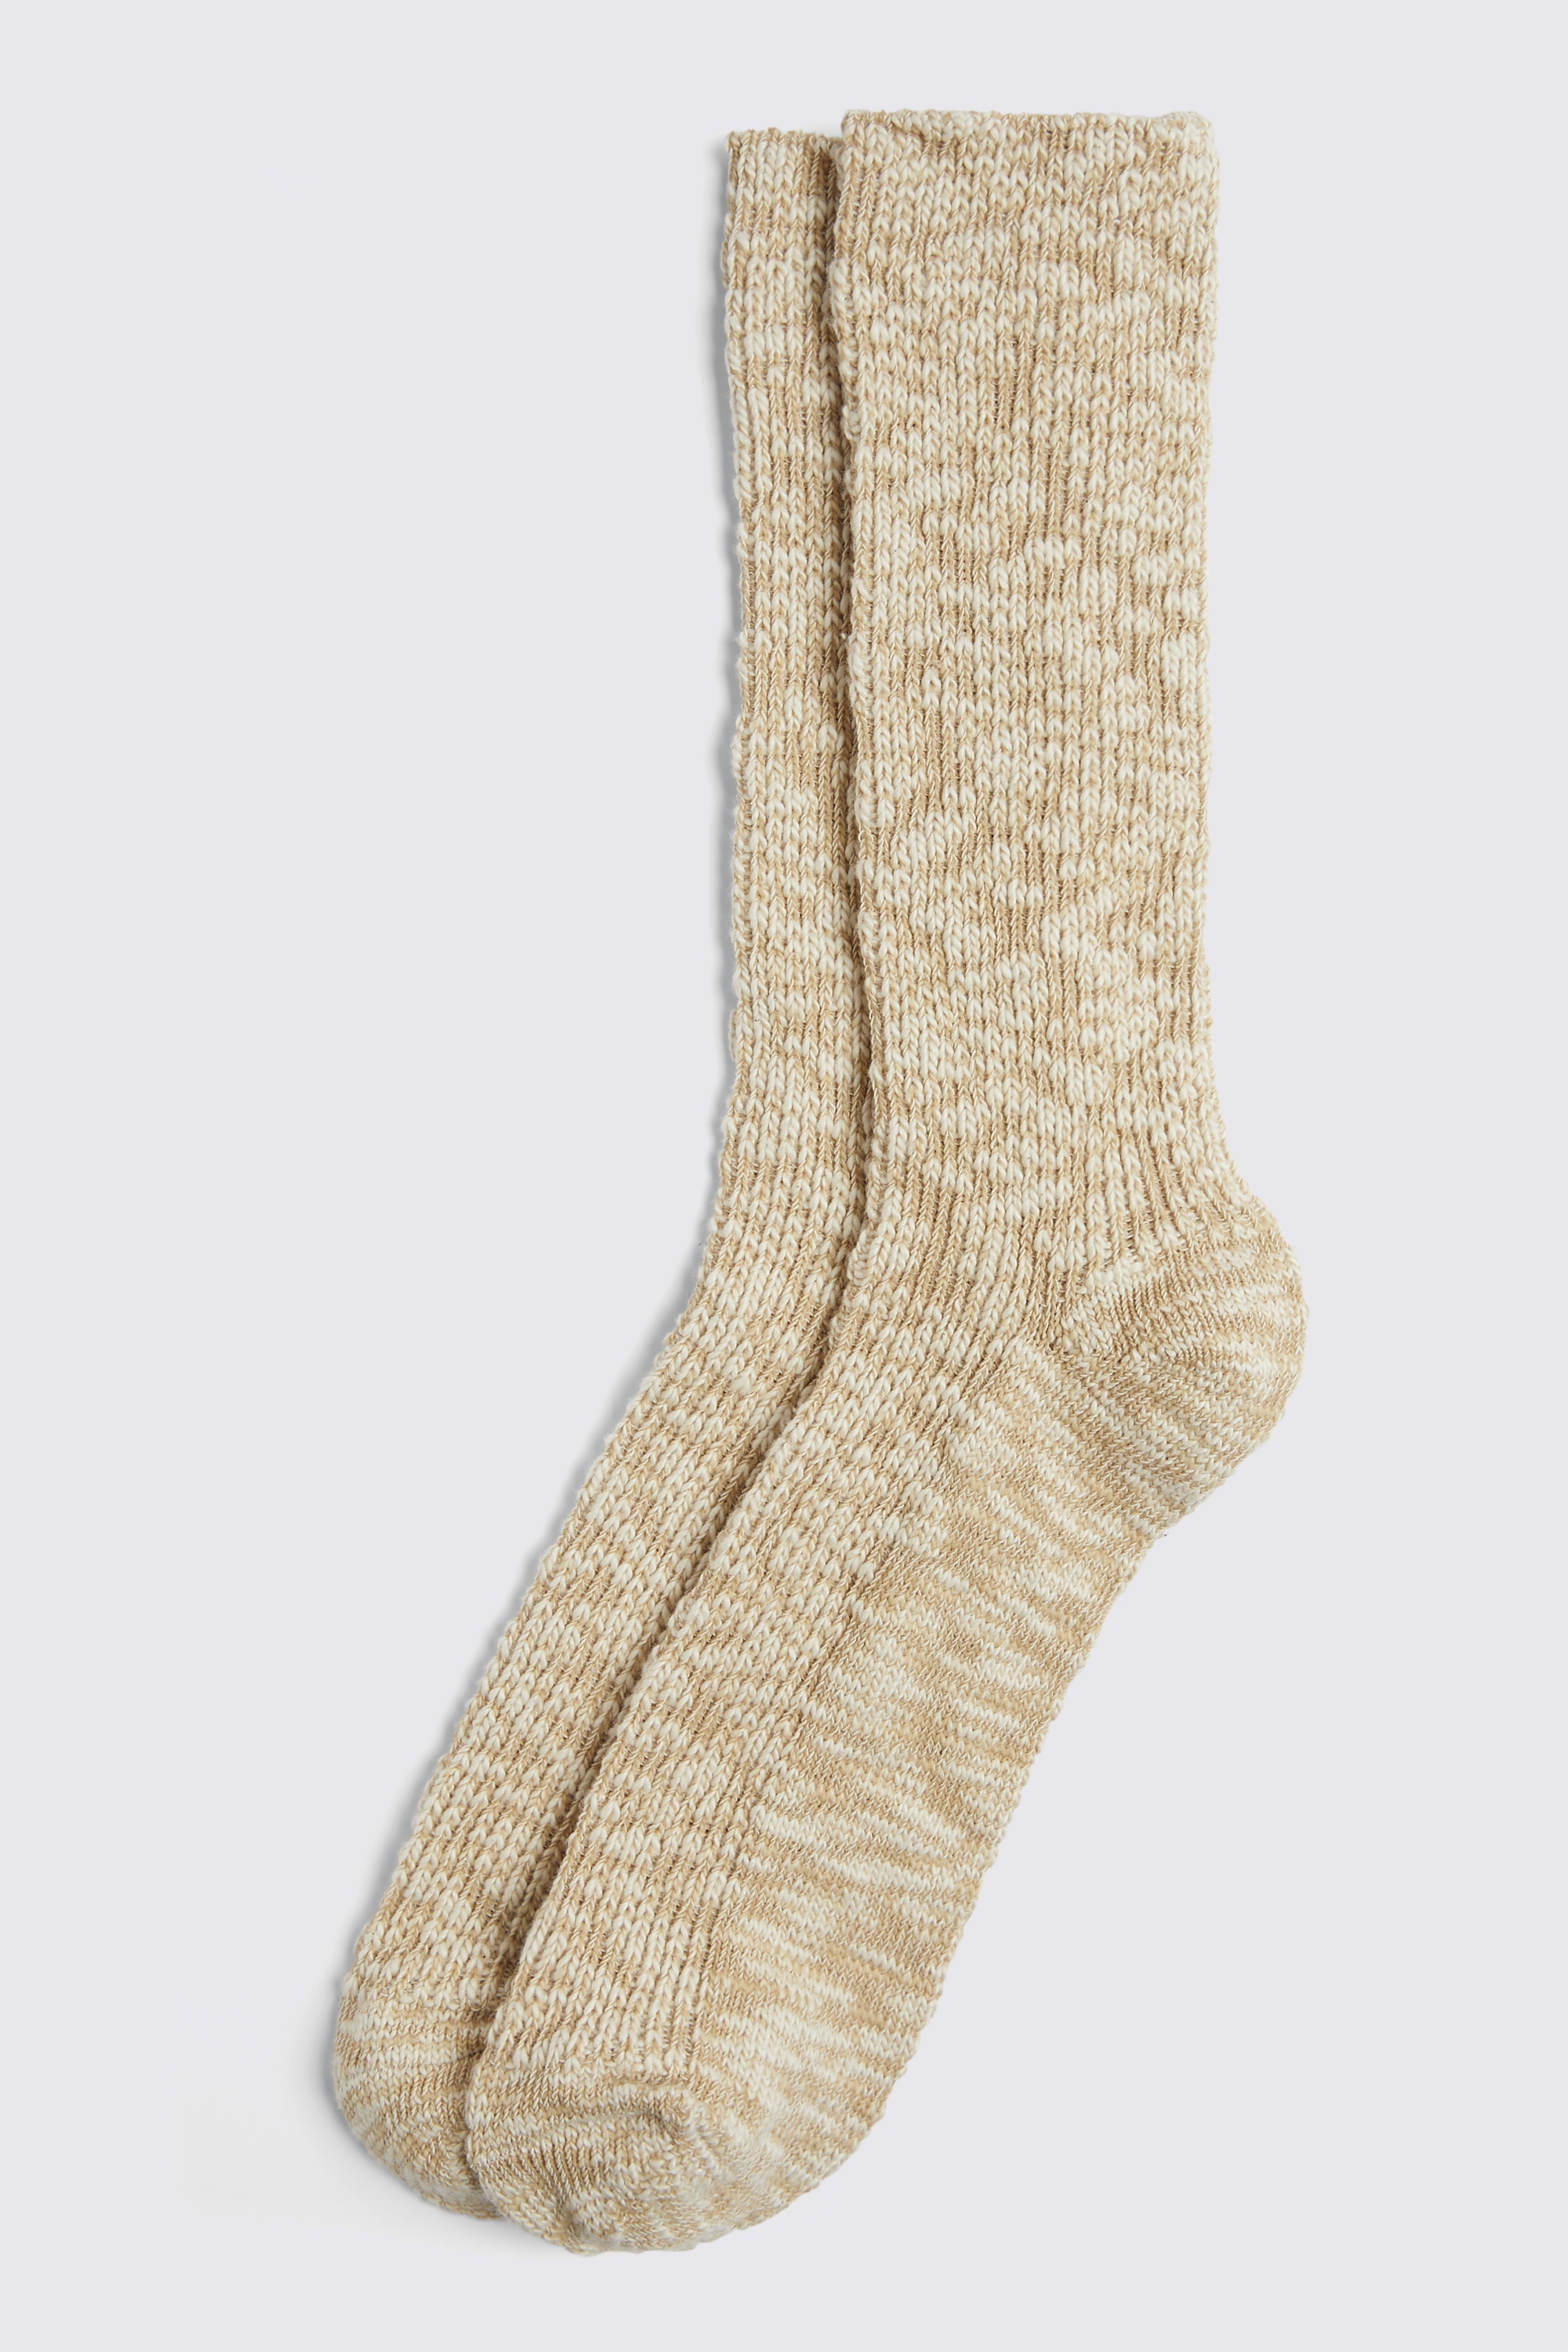 Beige Cotton Slub Socks | Buy Online at Moss